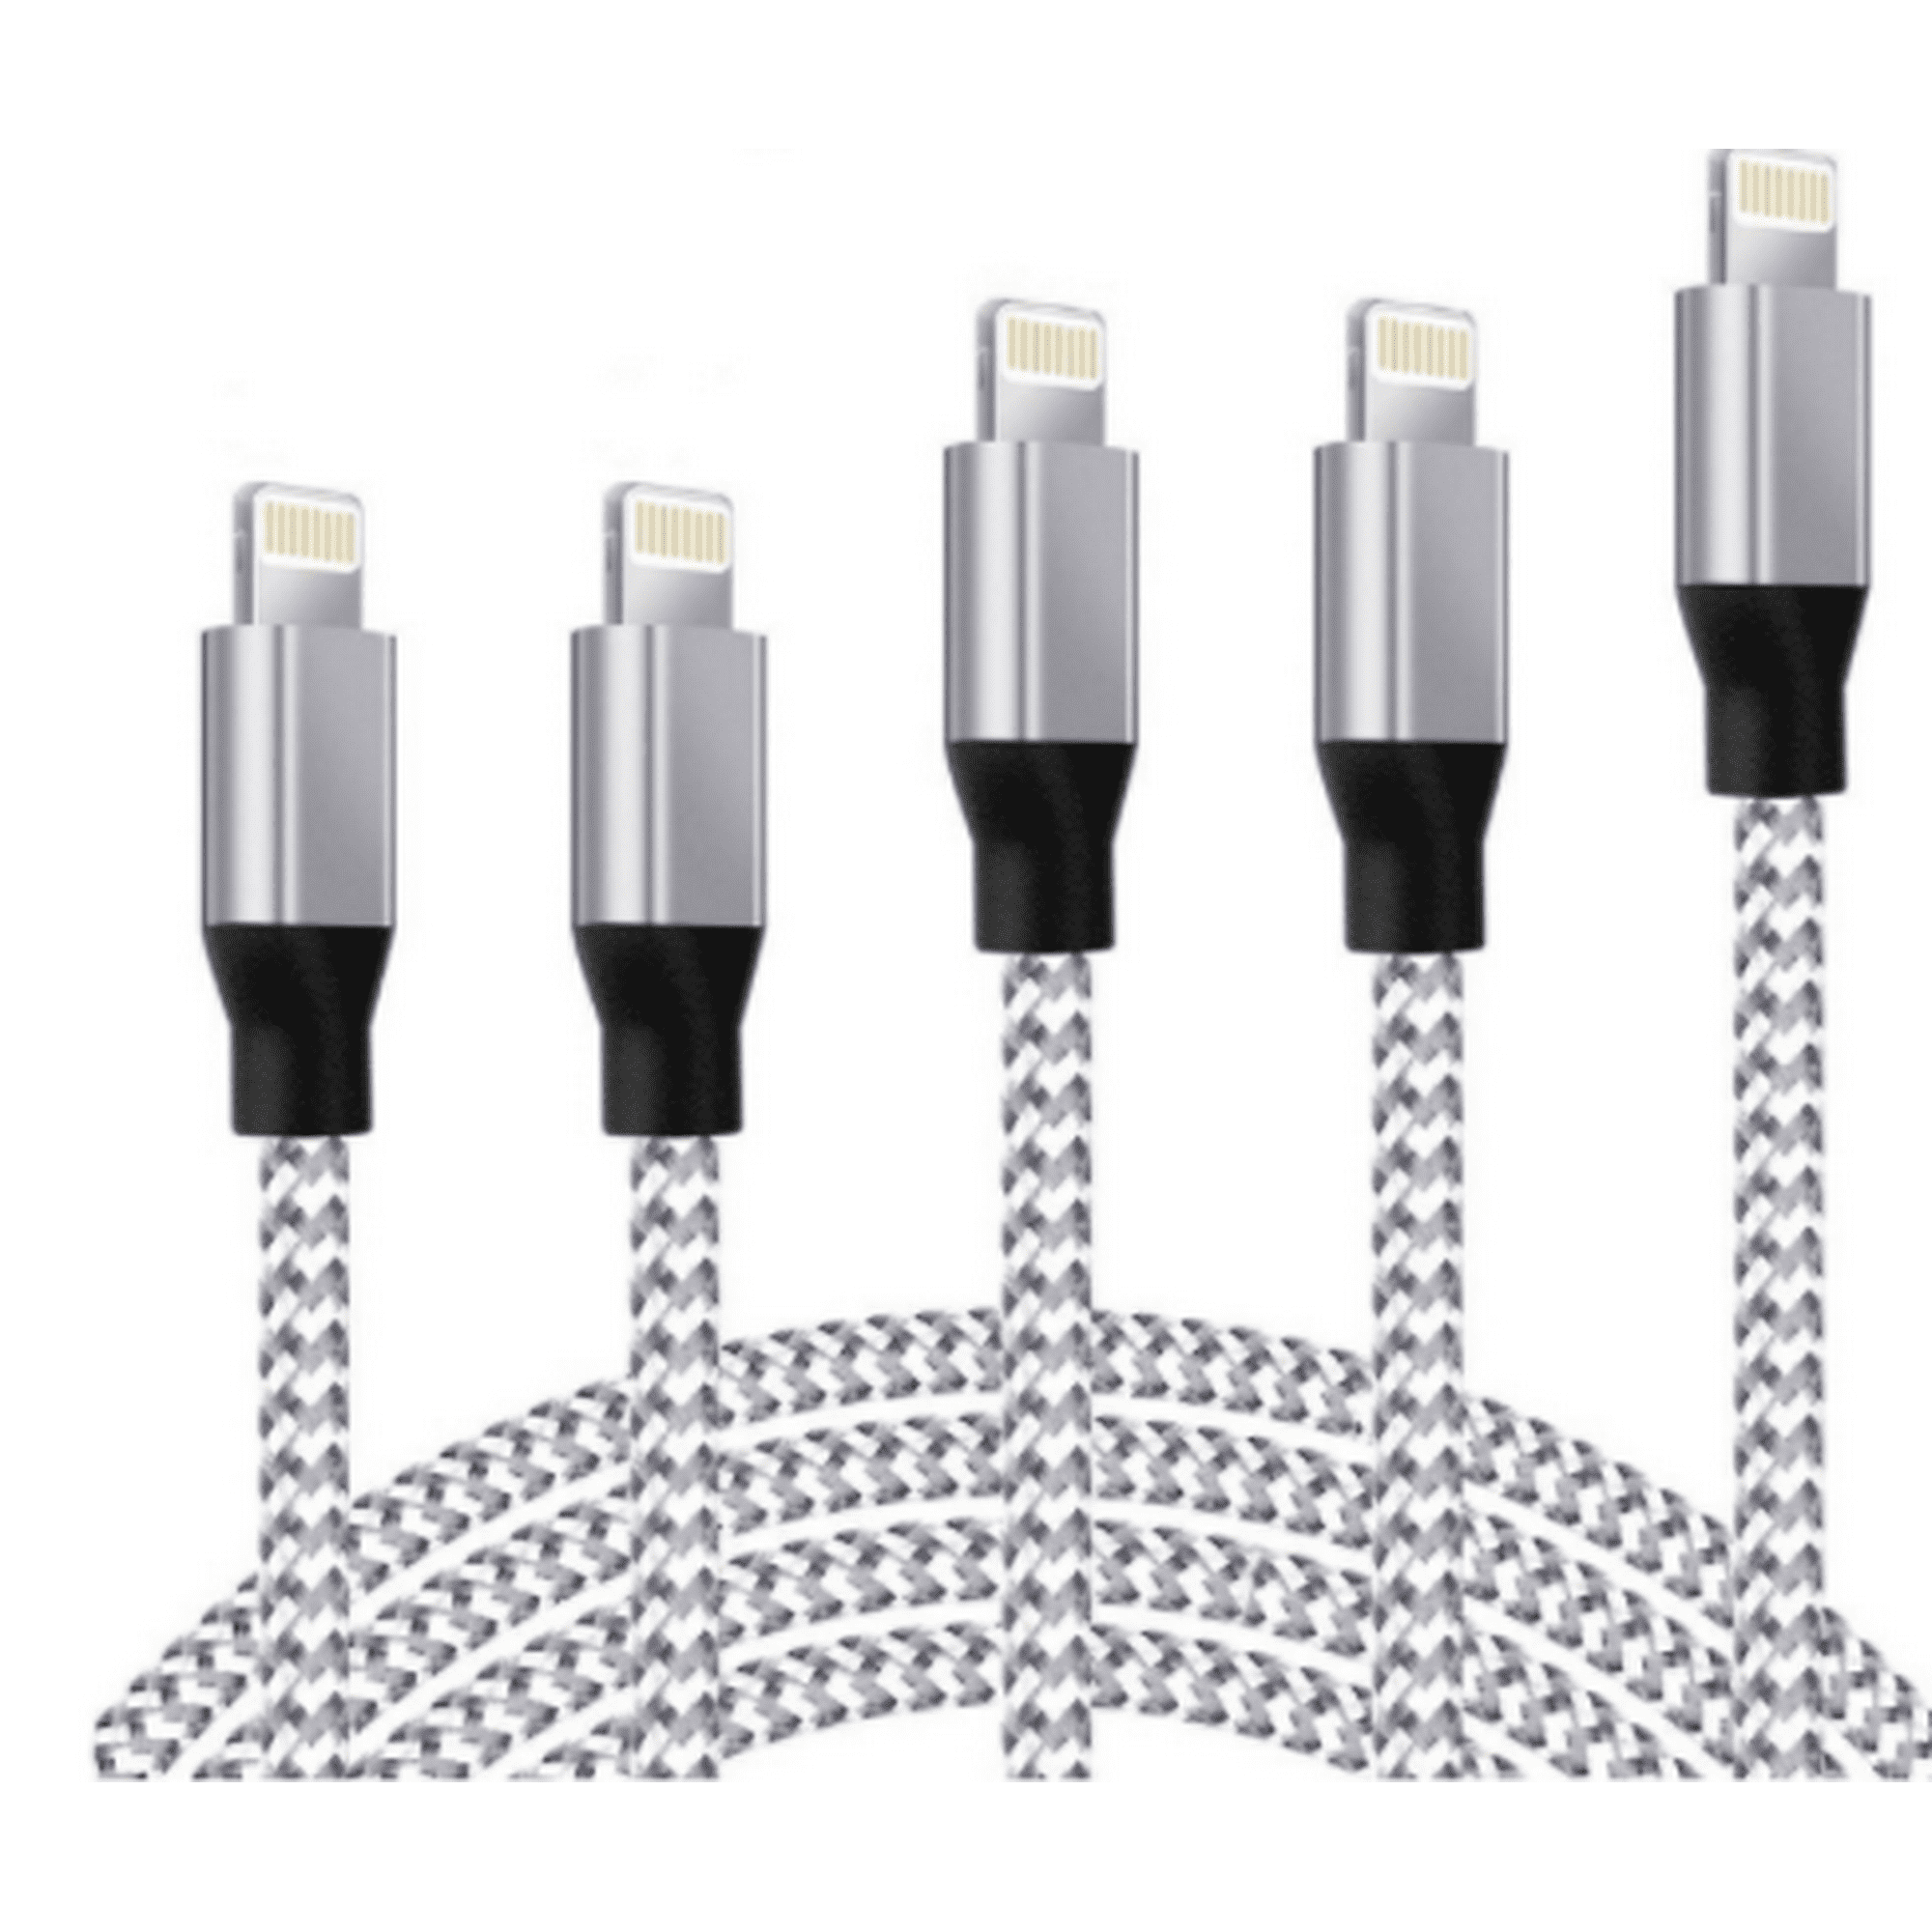 Cable de carga para iPhone de 4 pies, cable USB a Lightning certificado MFi  de Apple, cable USB de 4 pies para iPhone